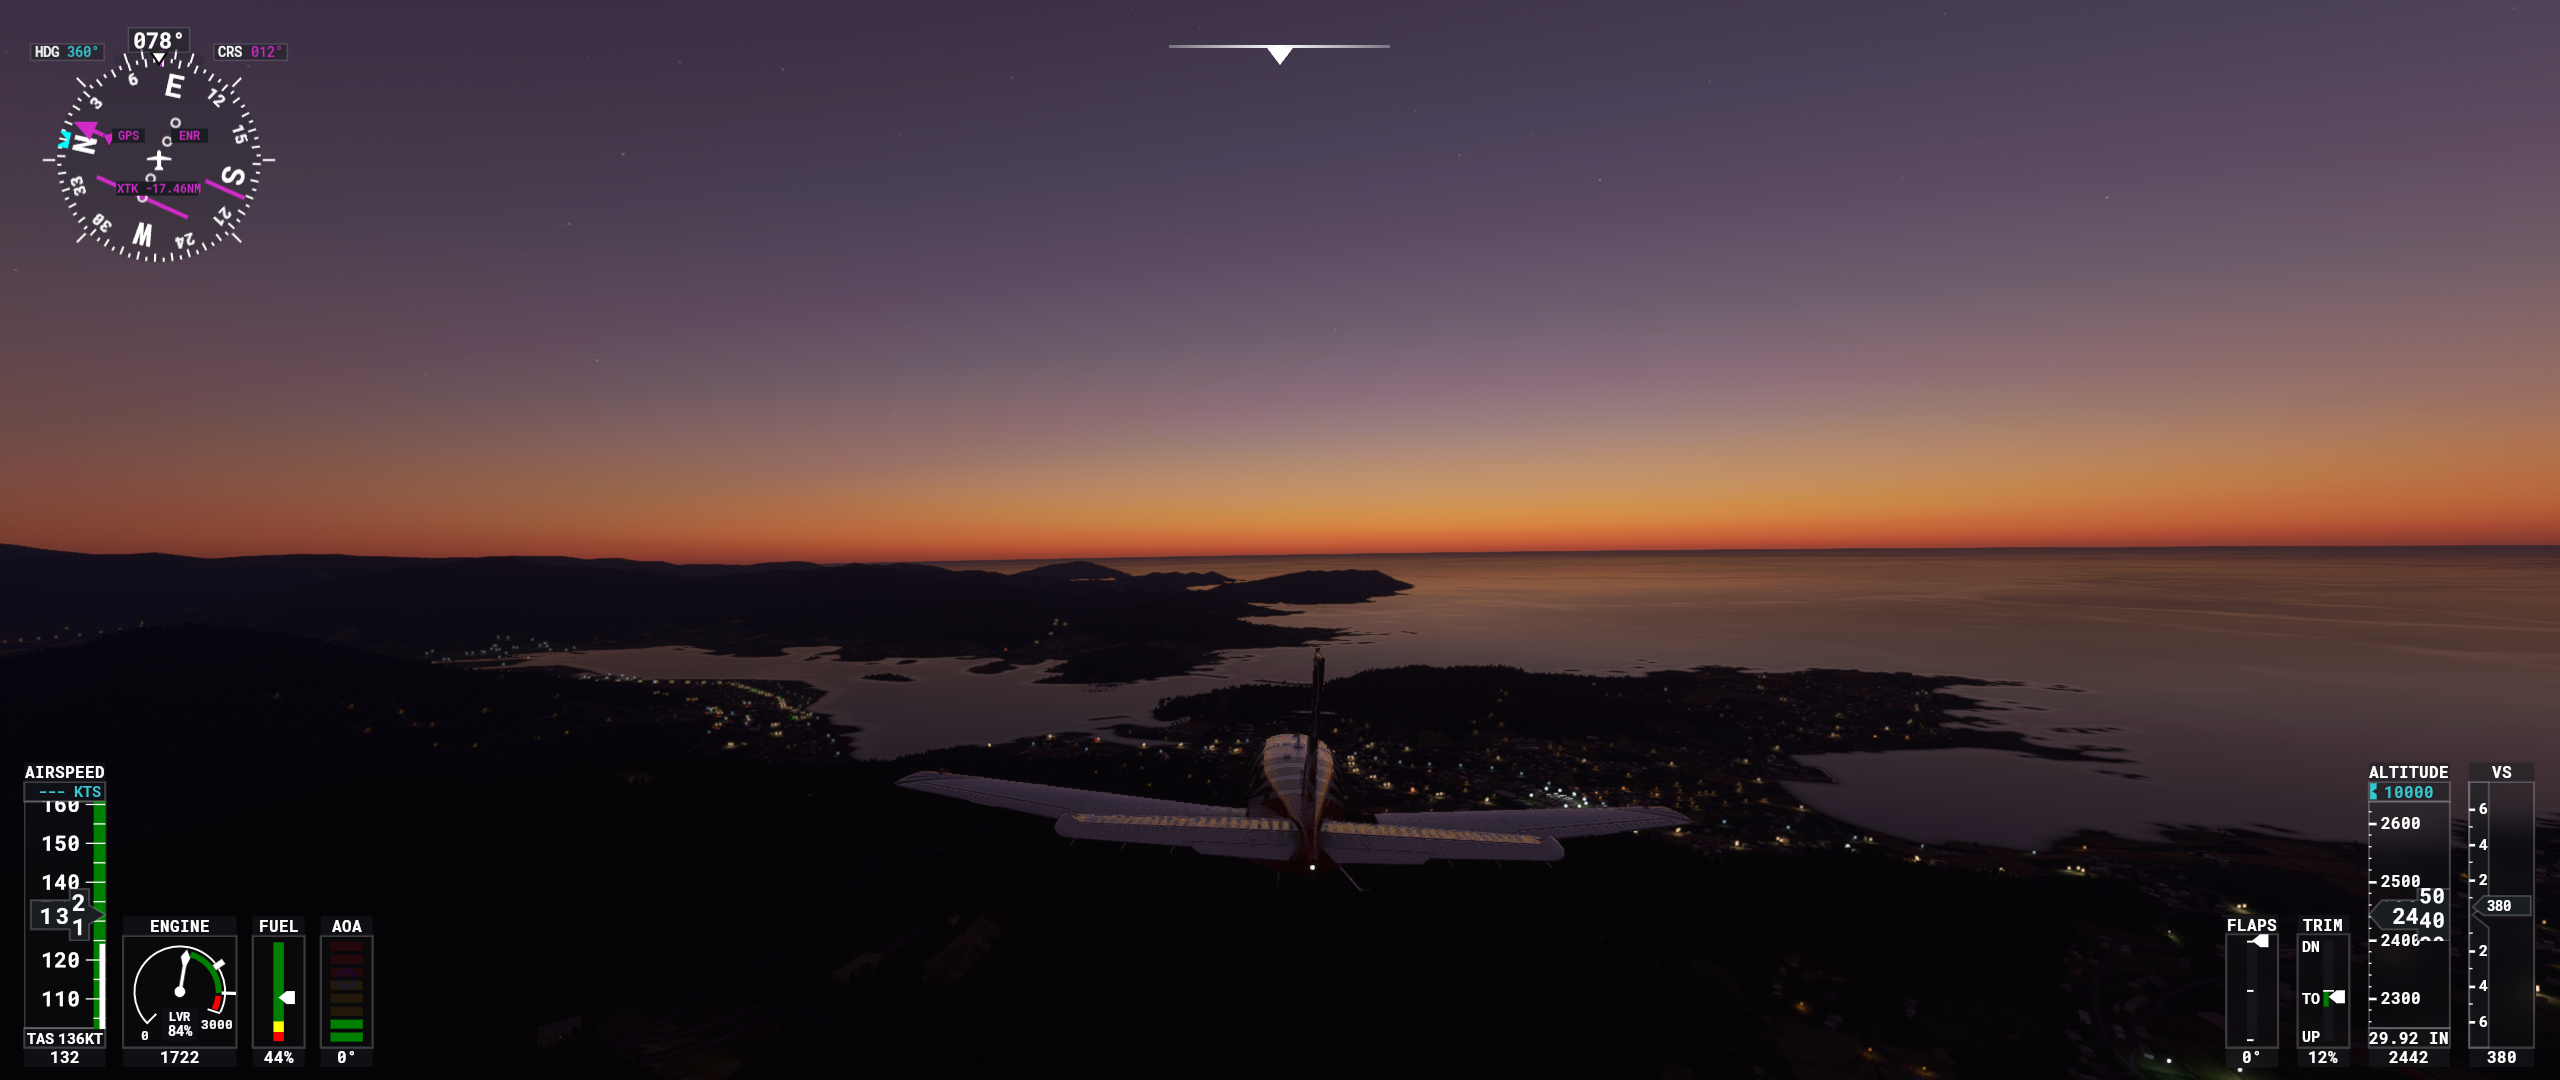 IMAGE(https://www.matchstickeyes.com/wp-content/uploads/2021/11/Flight-Simulator-Japanese-coast-at-sunset-1.png)